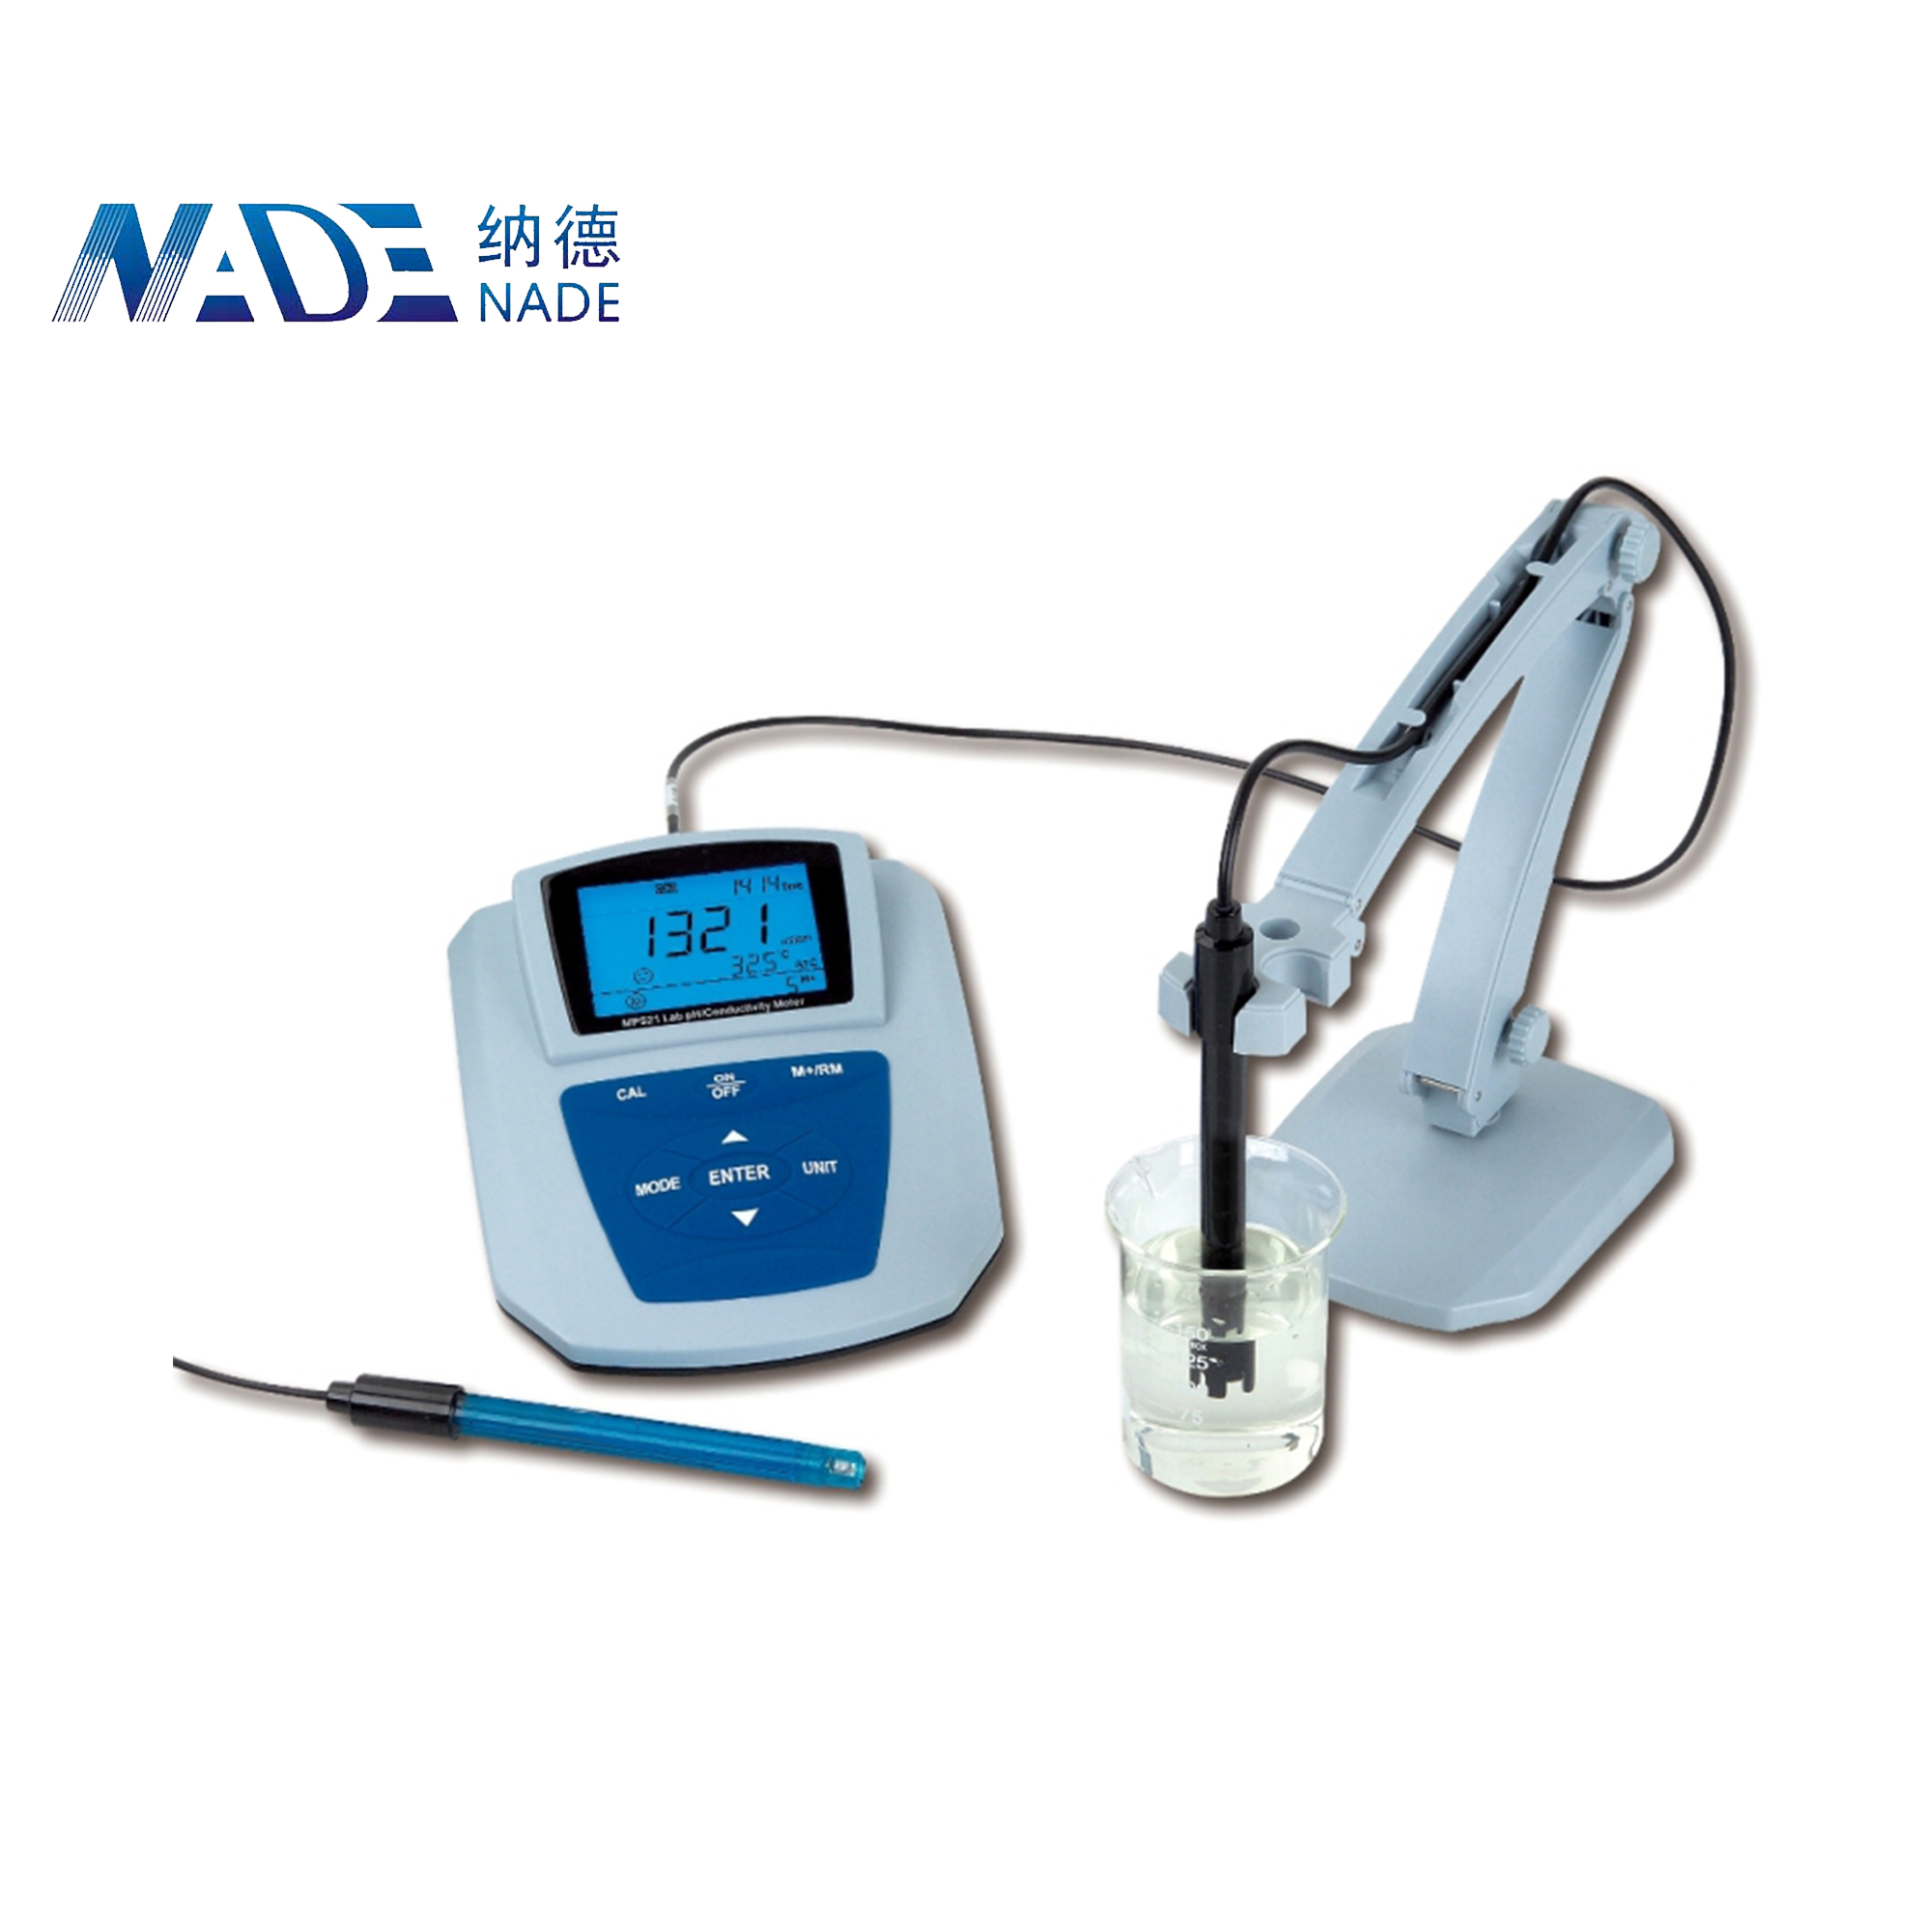 NADE lab Bench Type Multi-Parameter pH/Conductivity Meter MP521